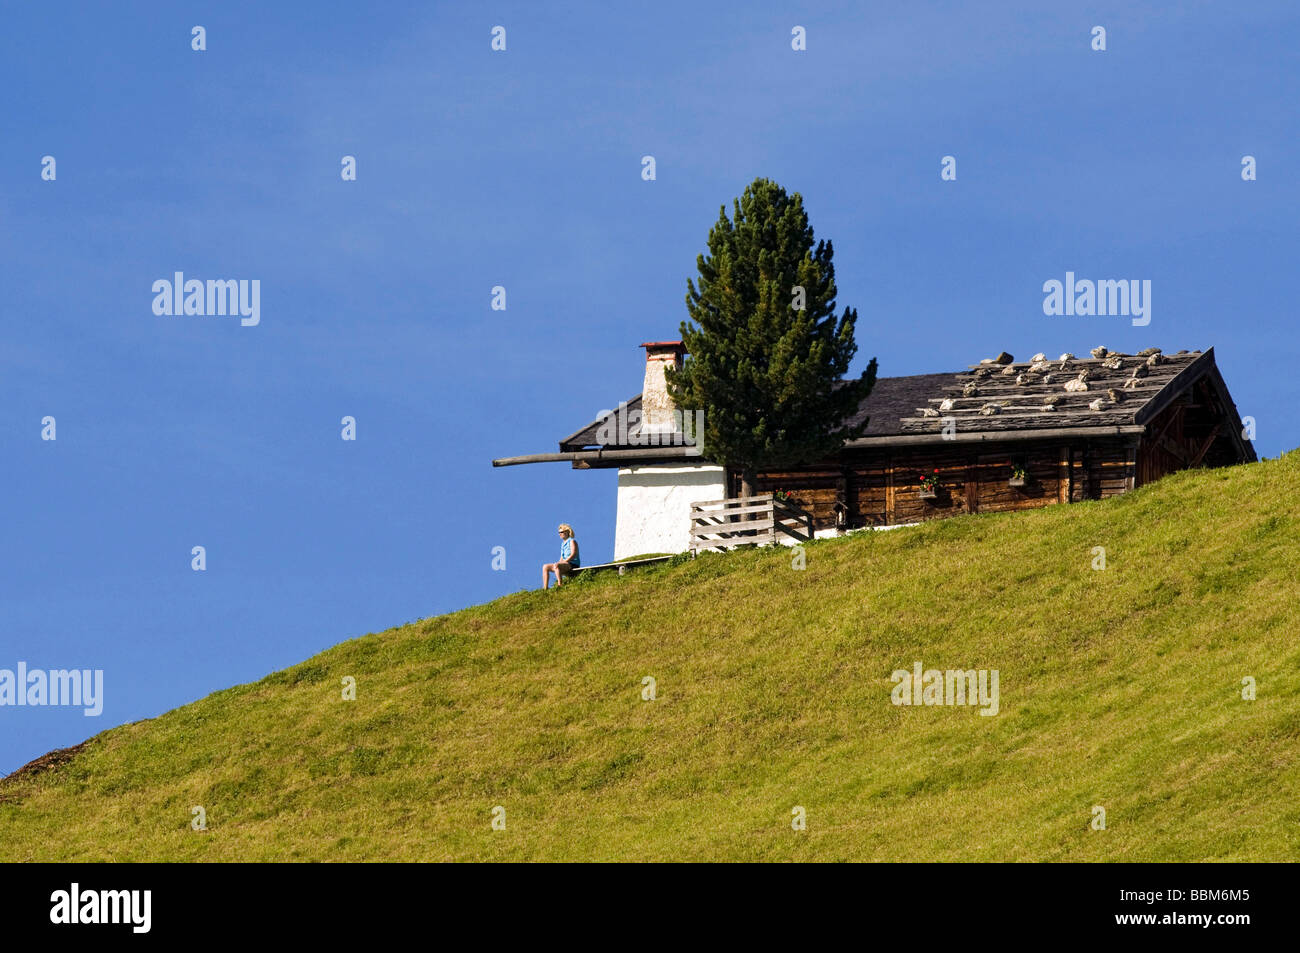 Stoeckl cabin, Navis, Wipptal Valley, Tyrol, Austria, Europe Stock Photo